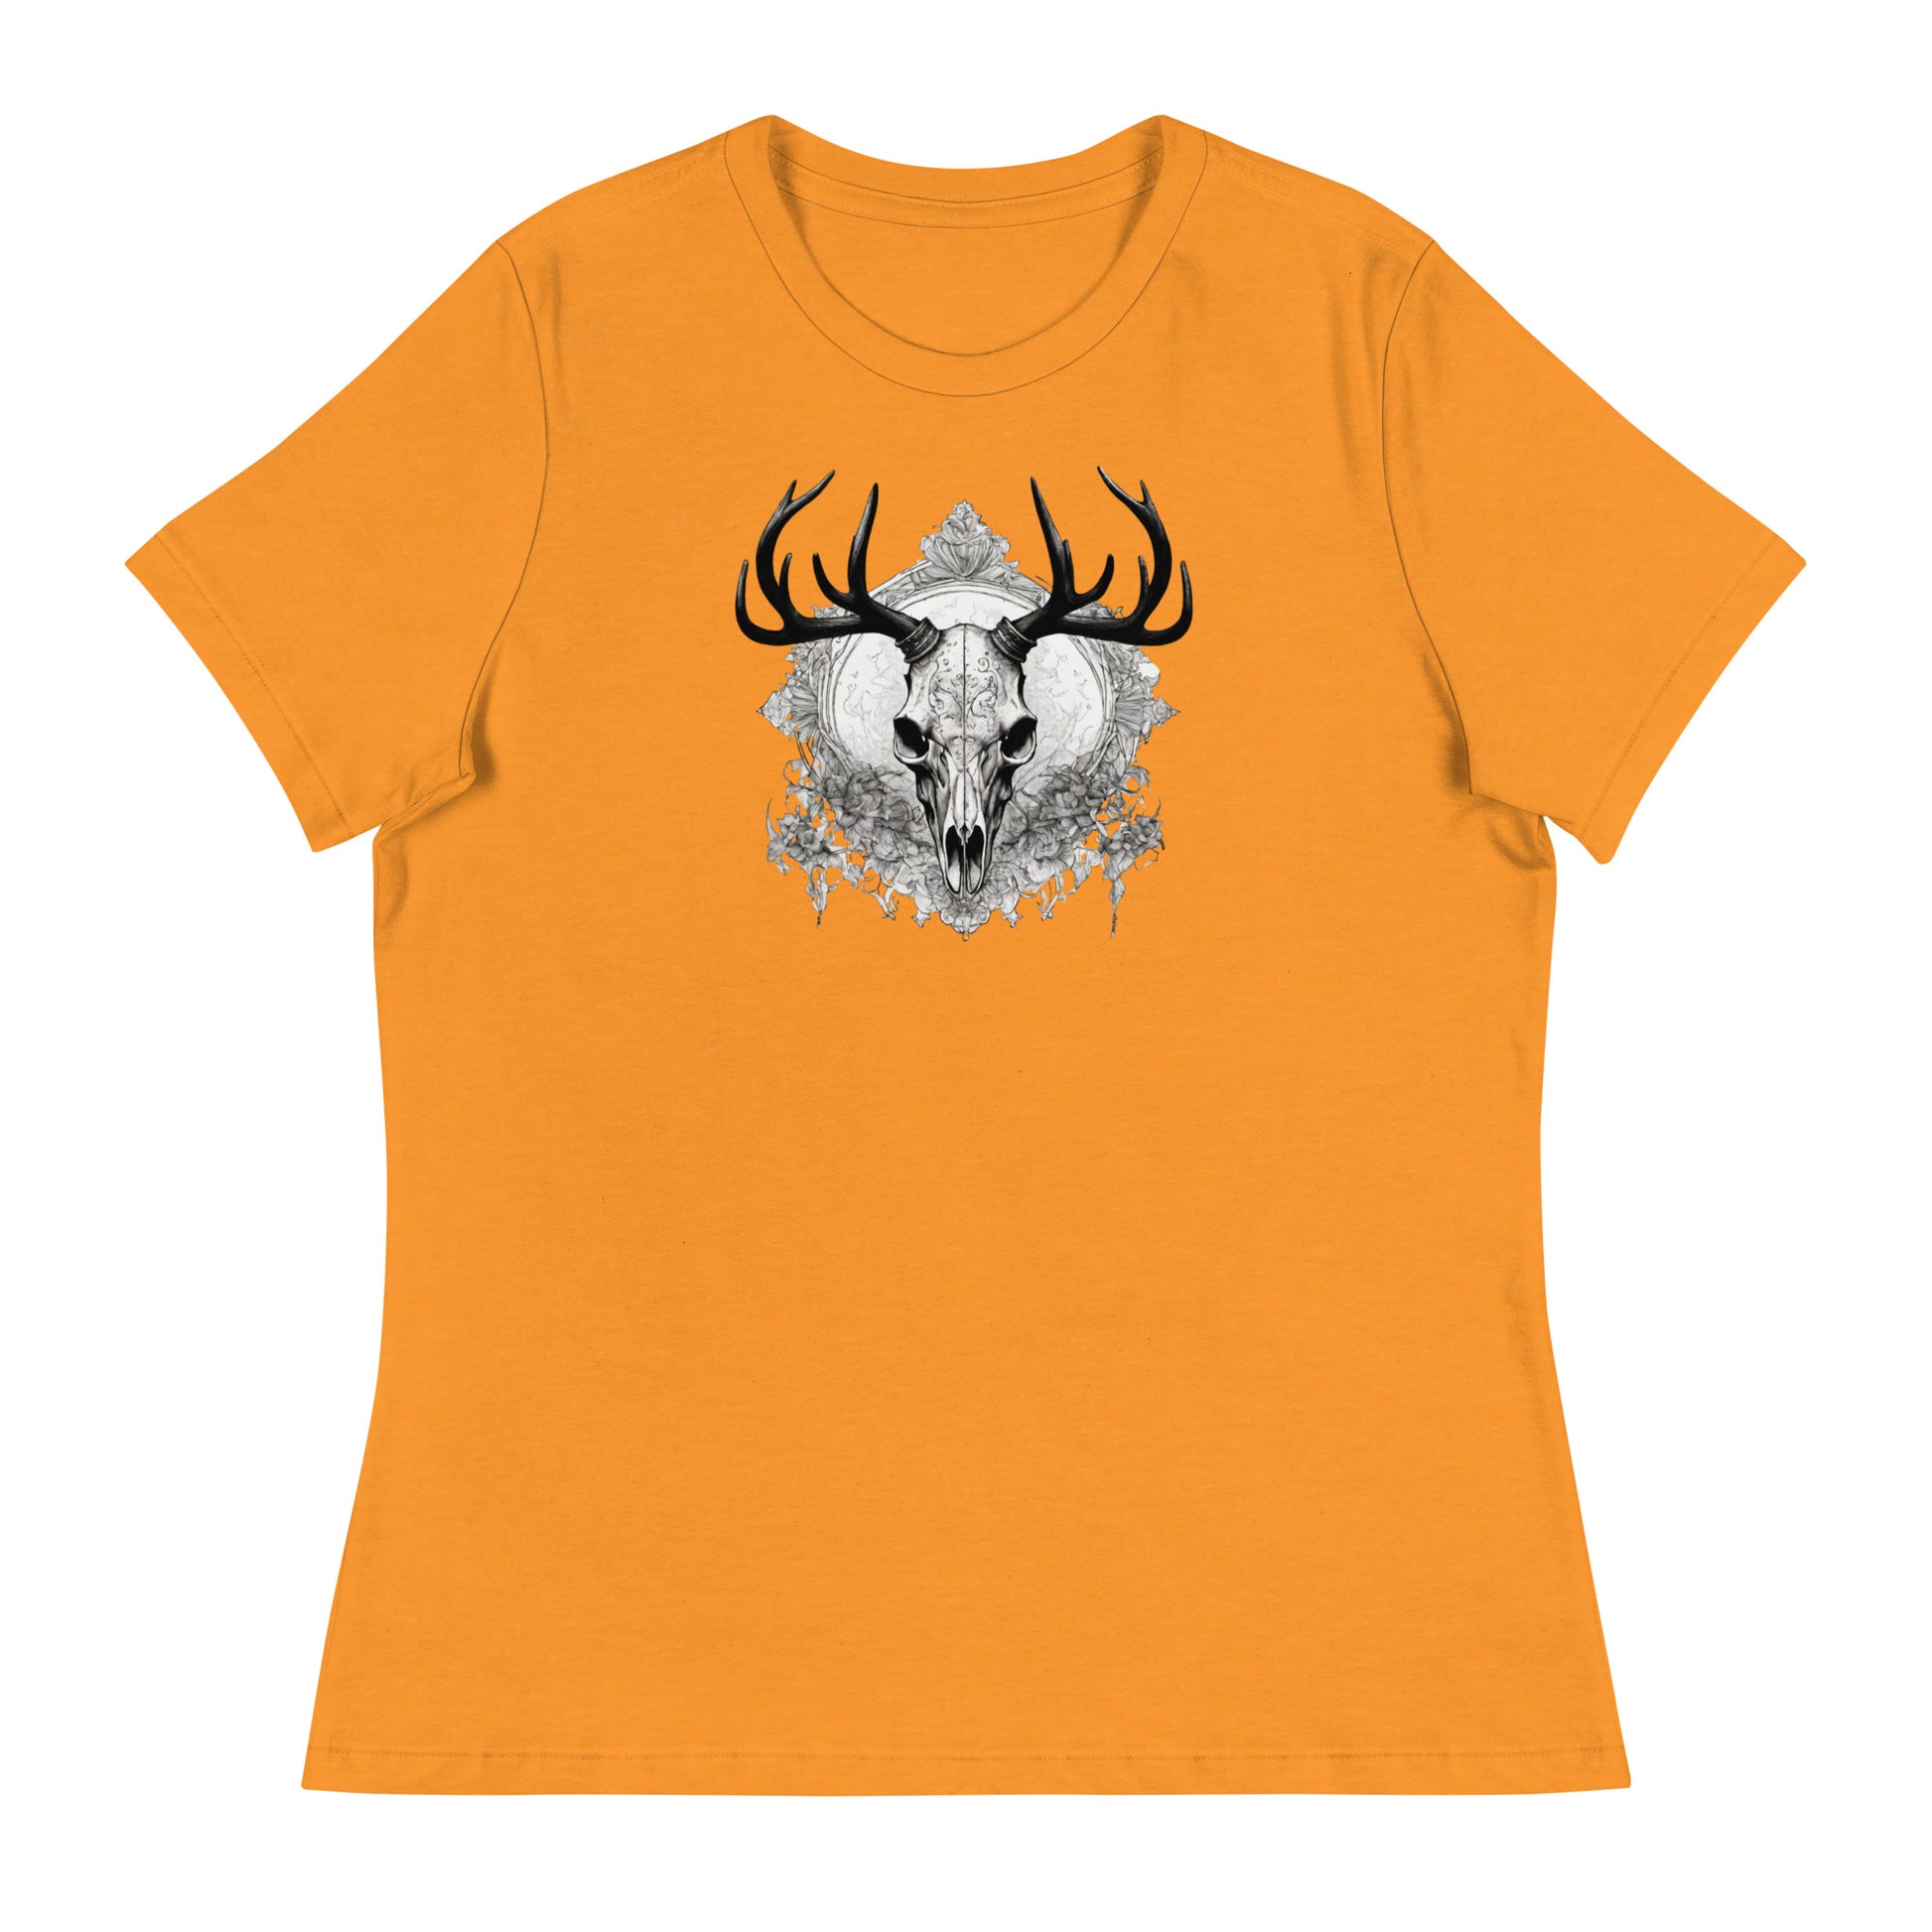 Decorative Deer Skull Women's T-Shirt Heather Marmalade